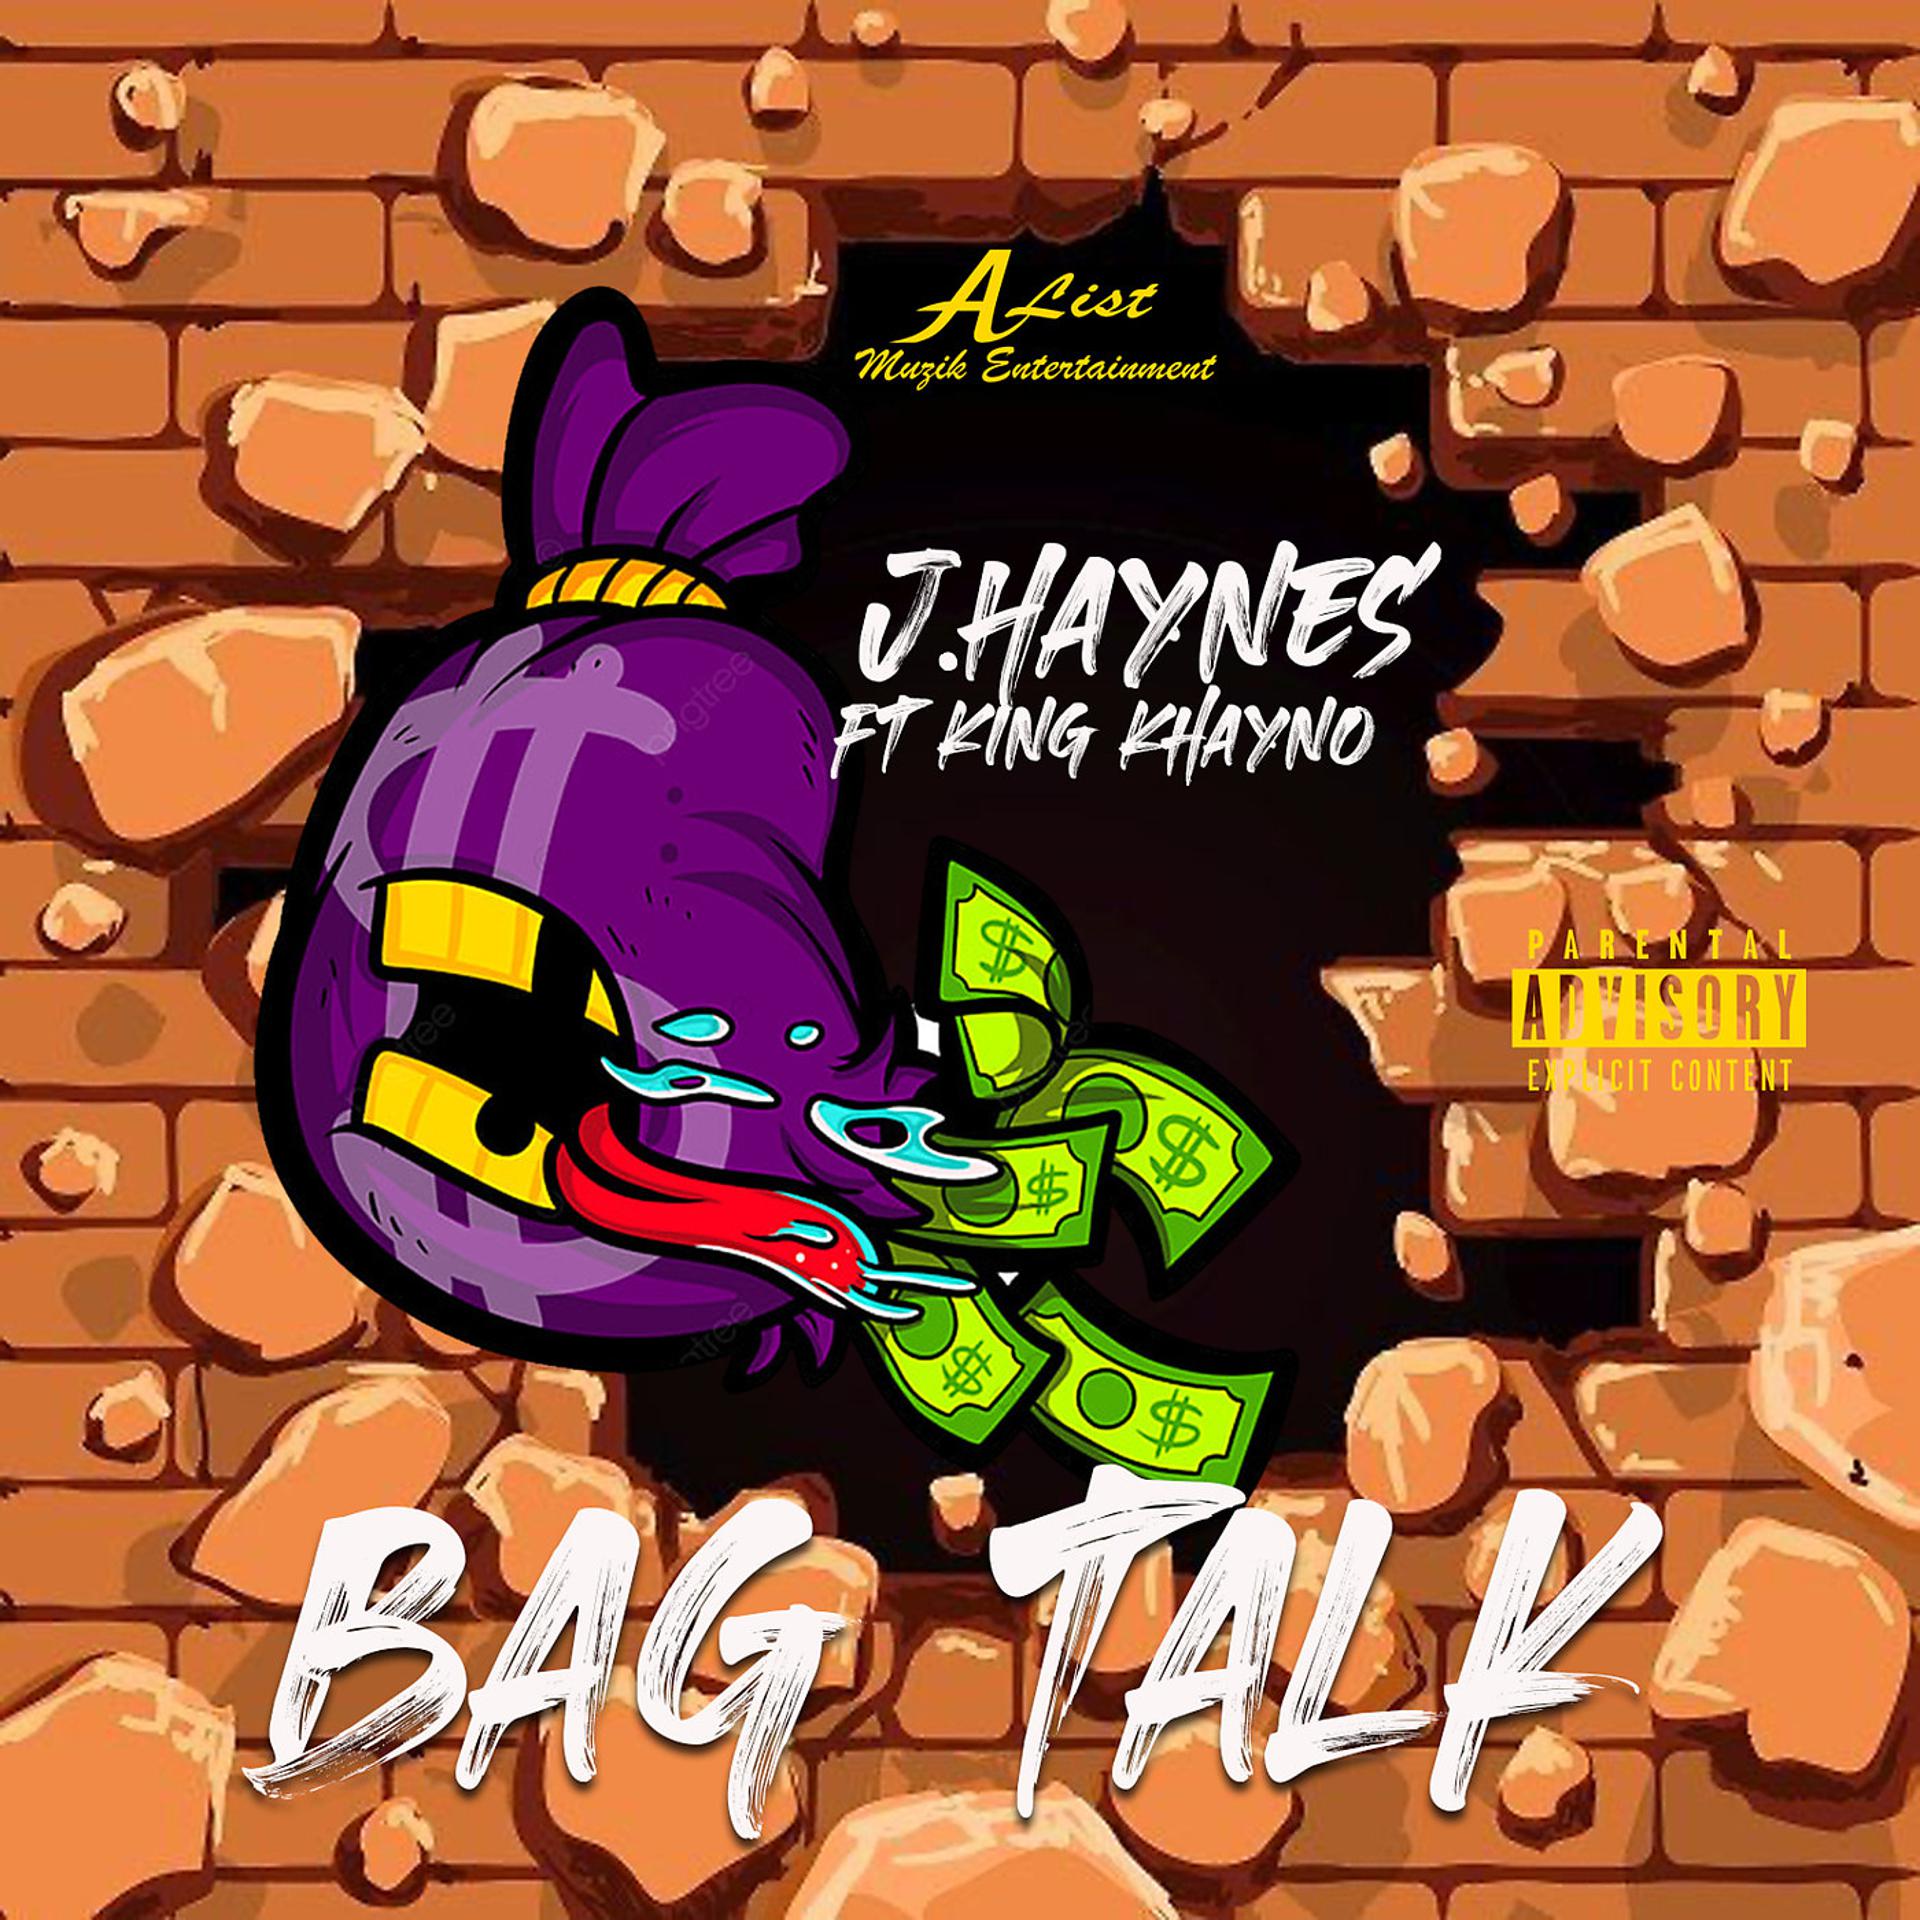 Постер альбома Bag Talk